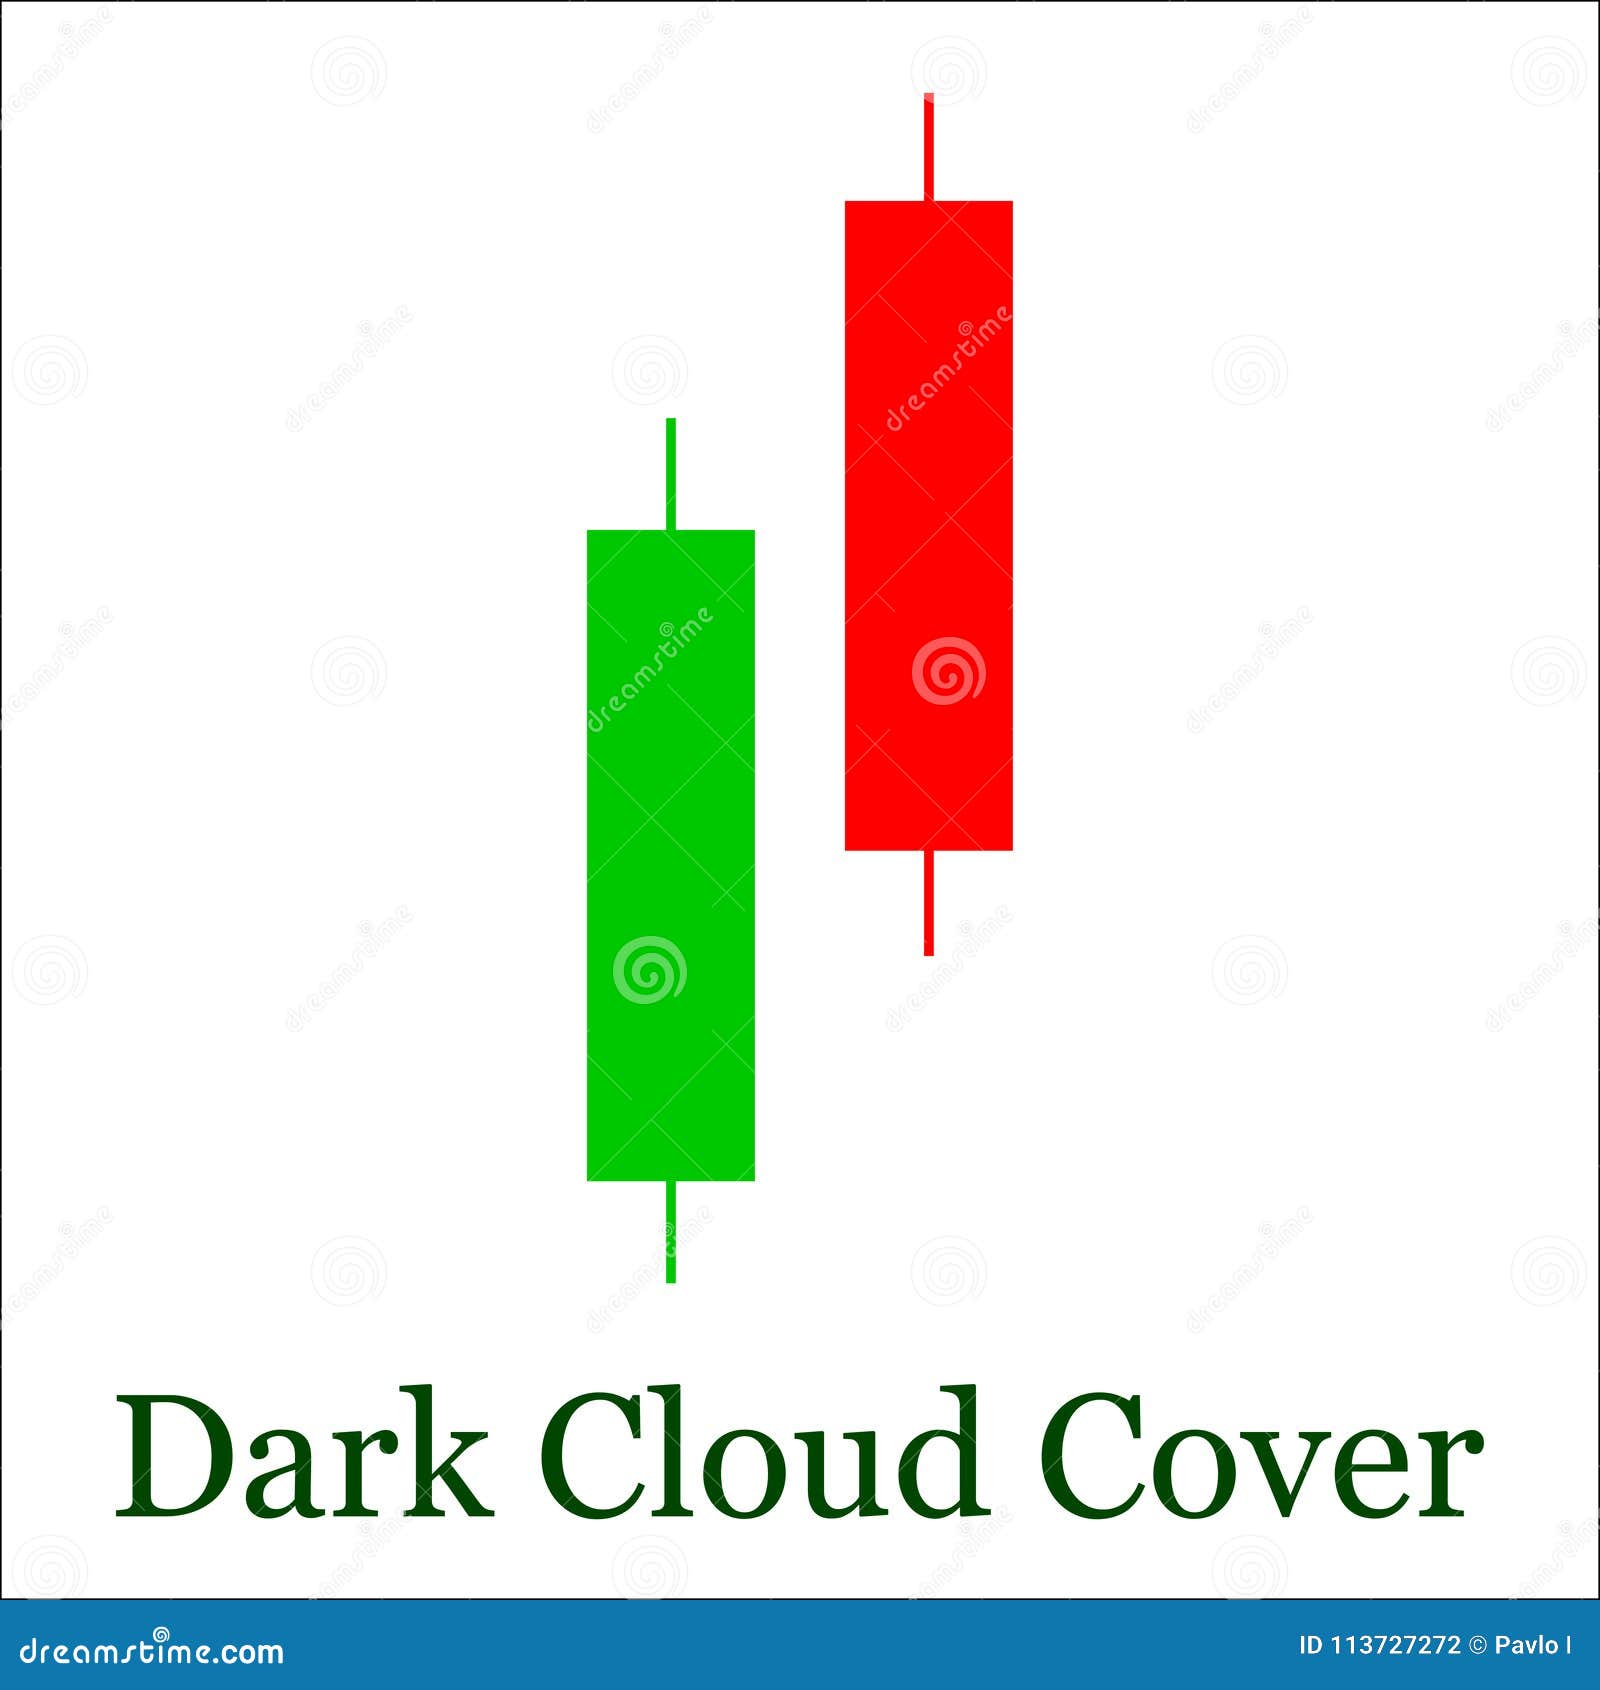 Cloud Cover Chart